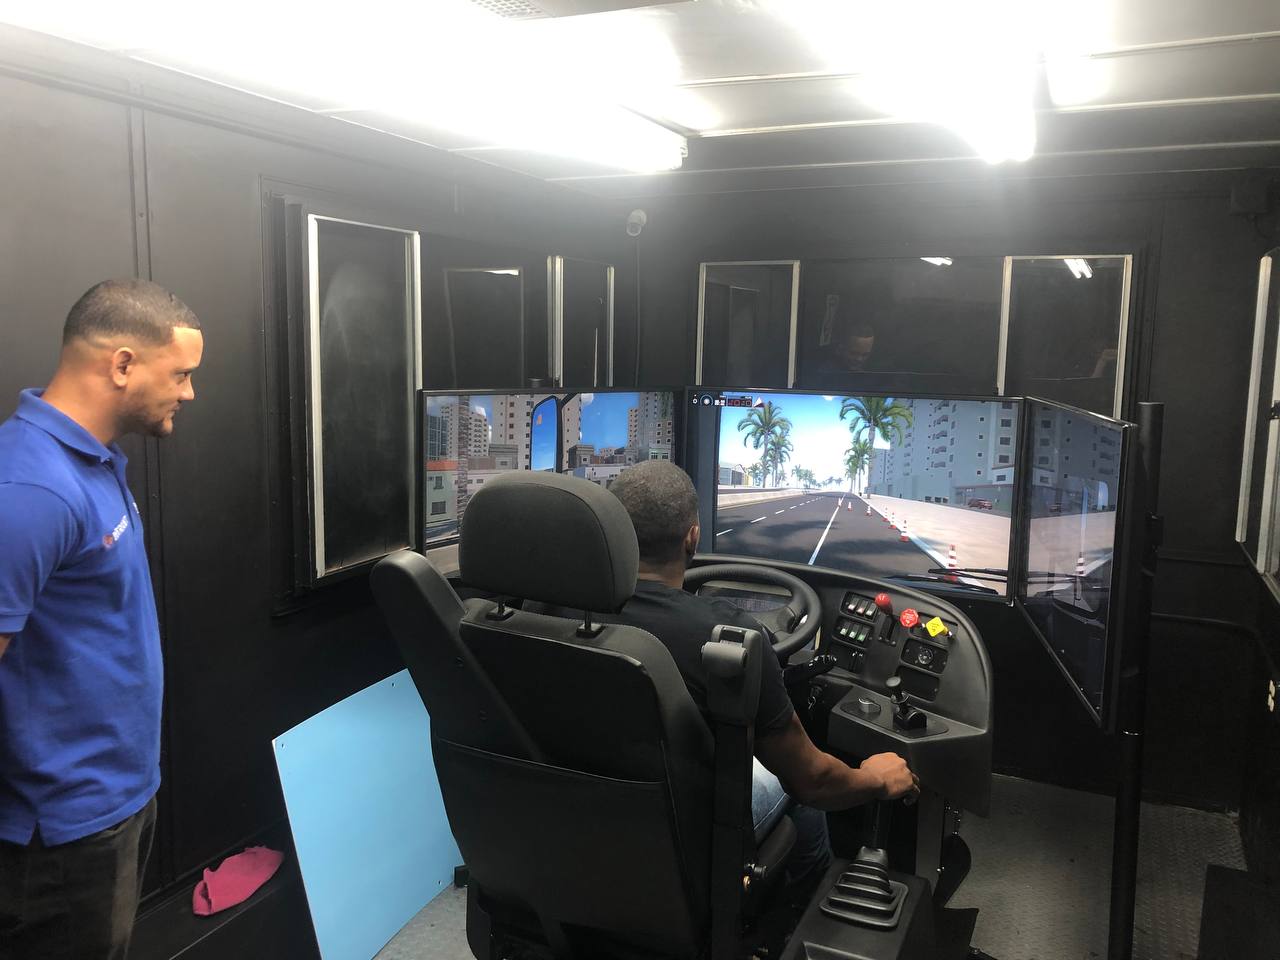 INTRANT Dominican Republic driving test with simumak simulator